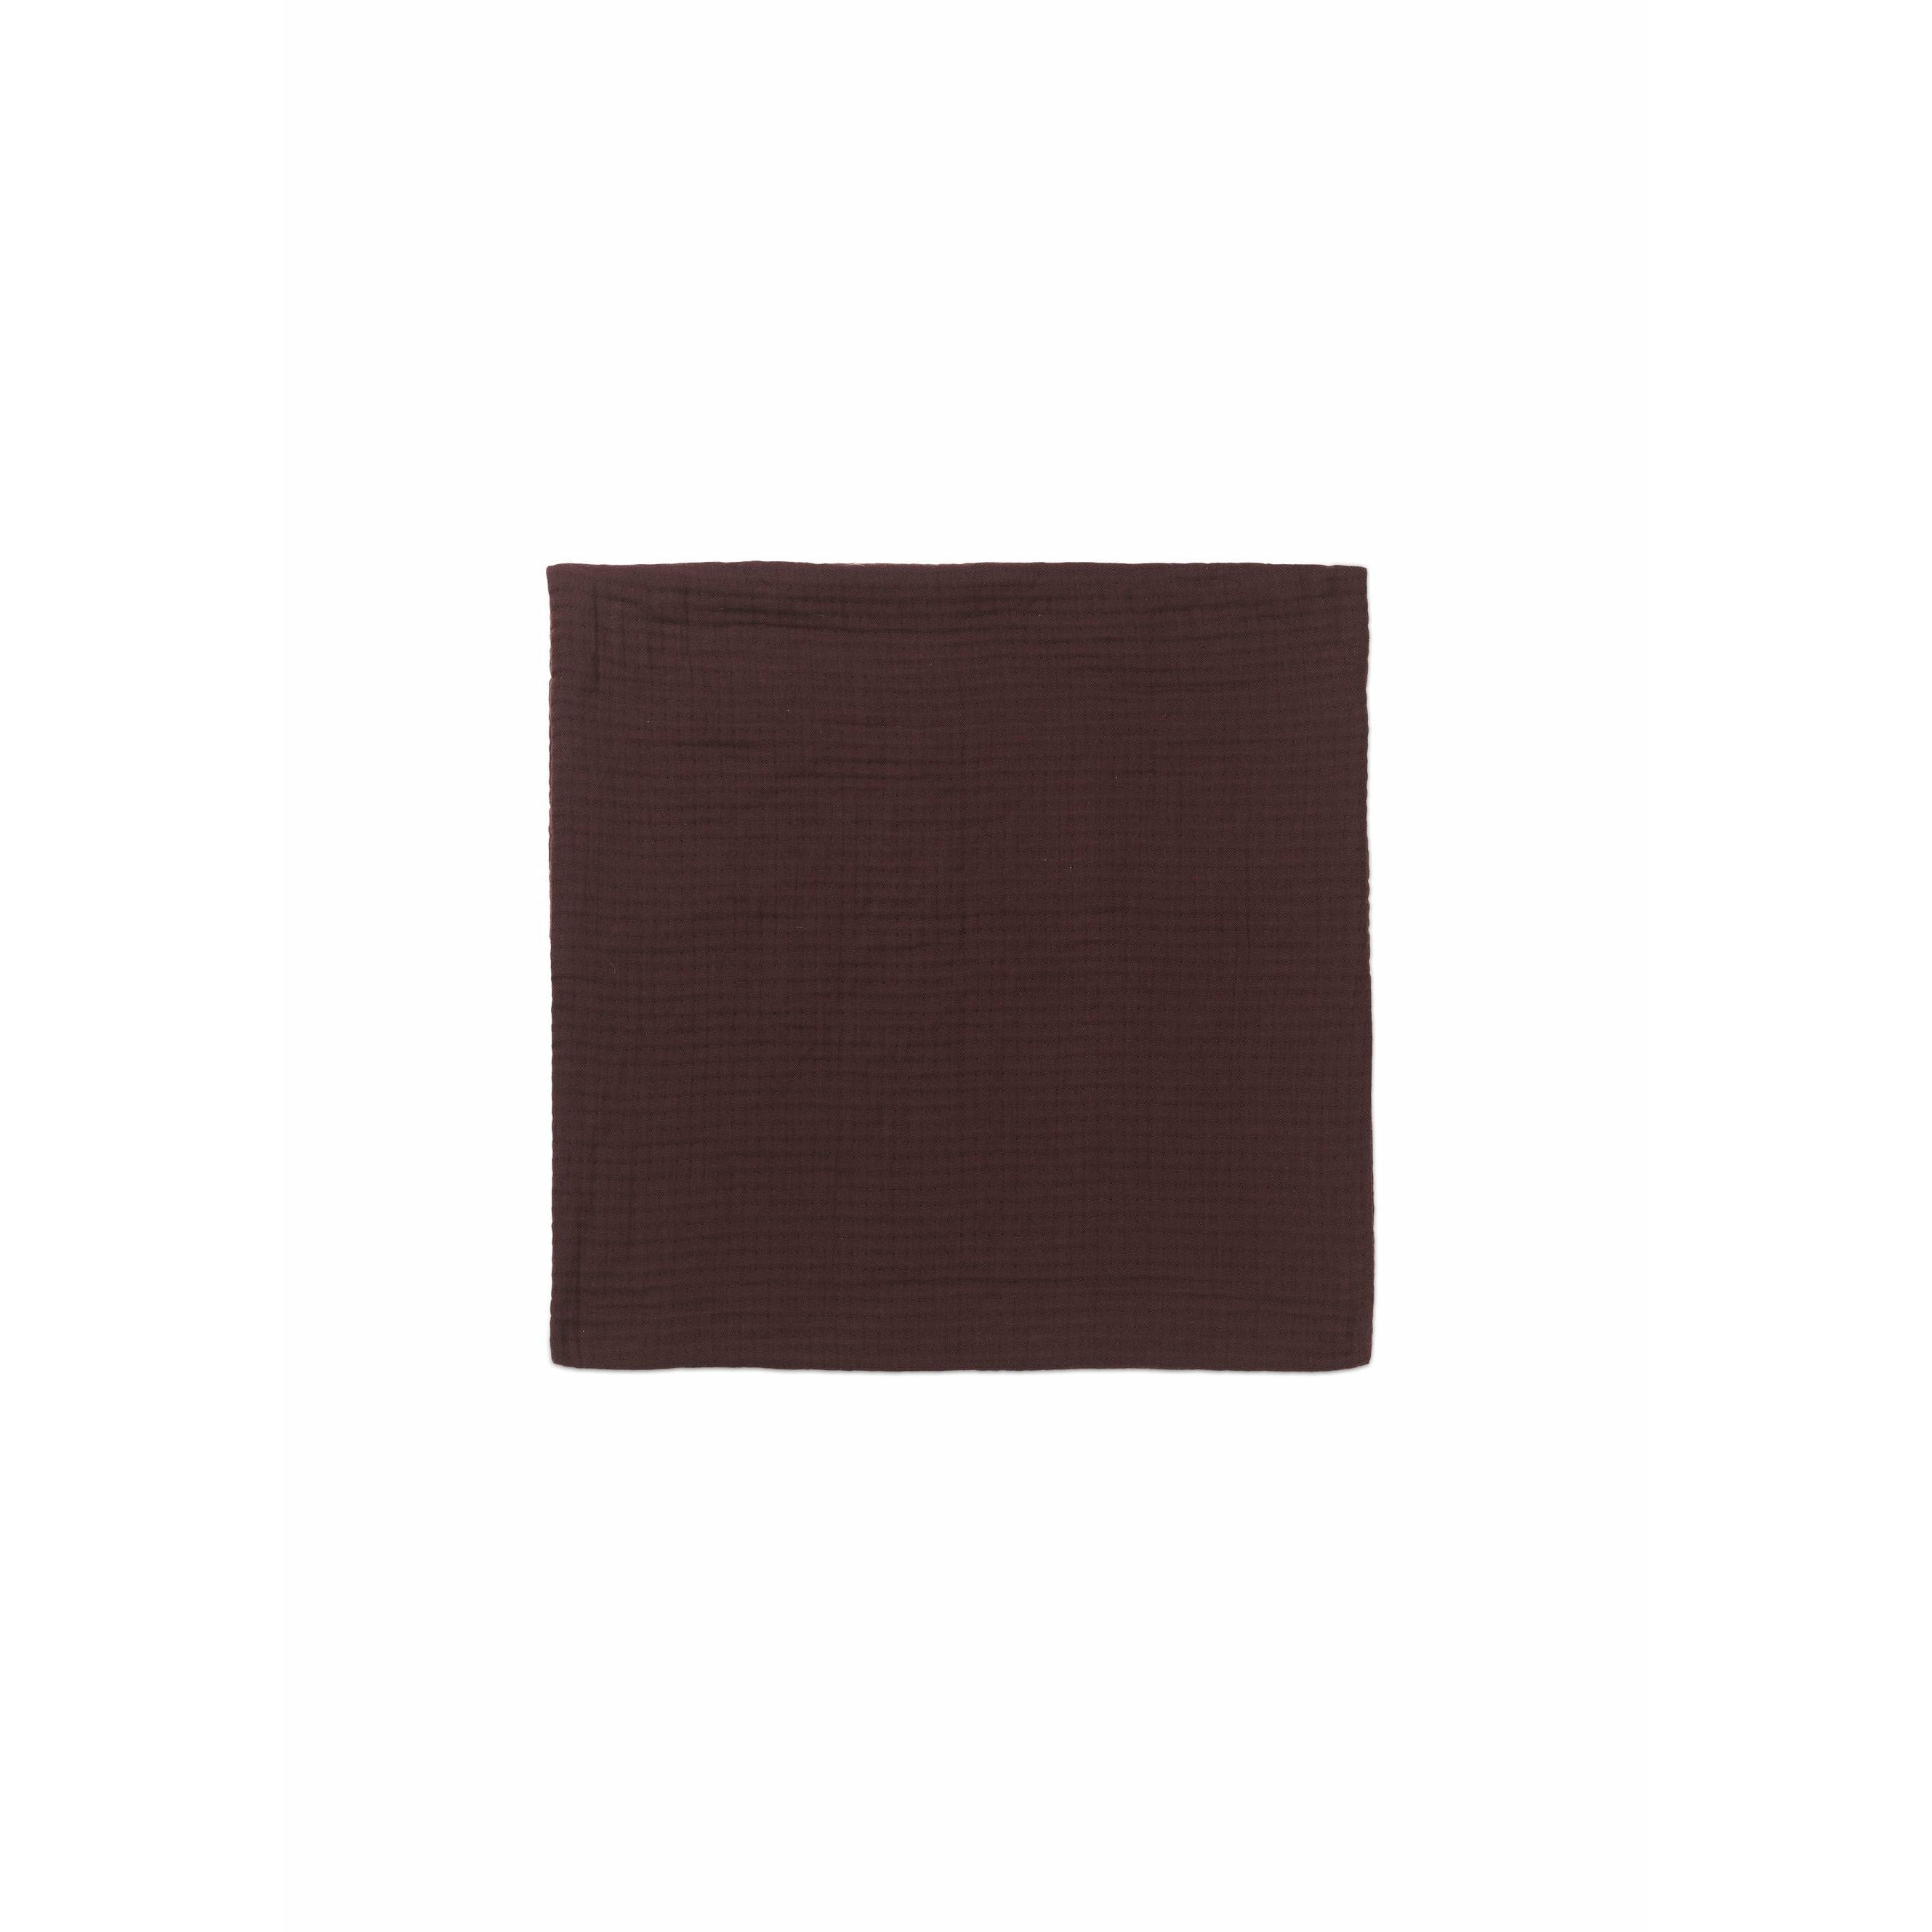 Juna View Cushion 45x45 cm, čokoláda